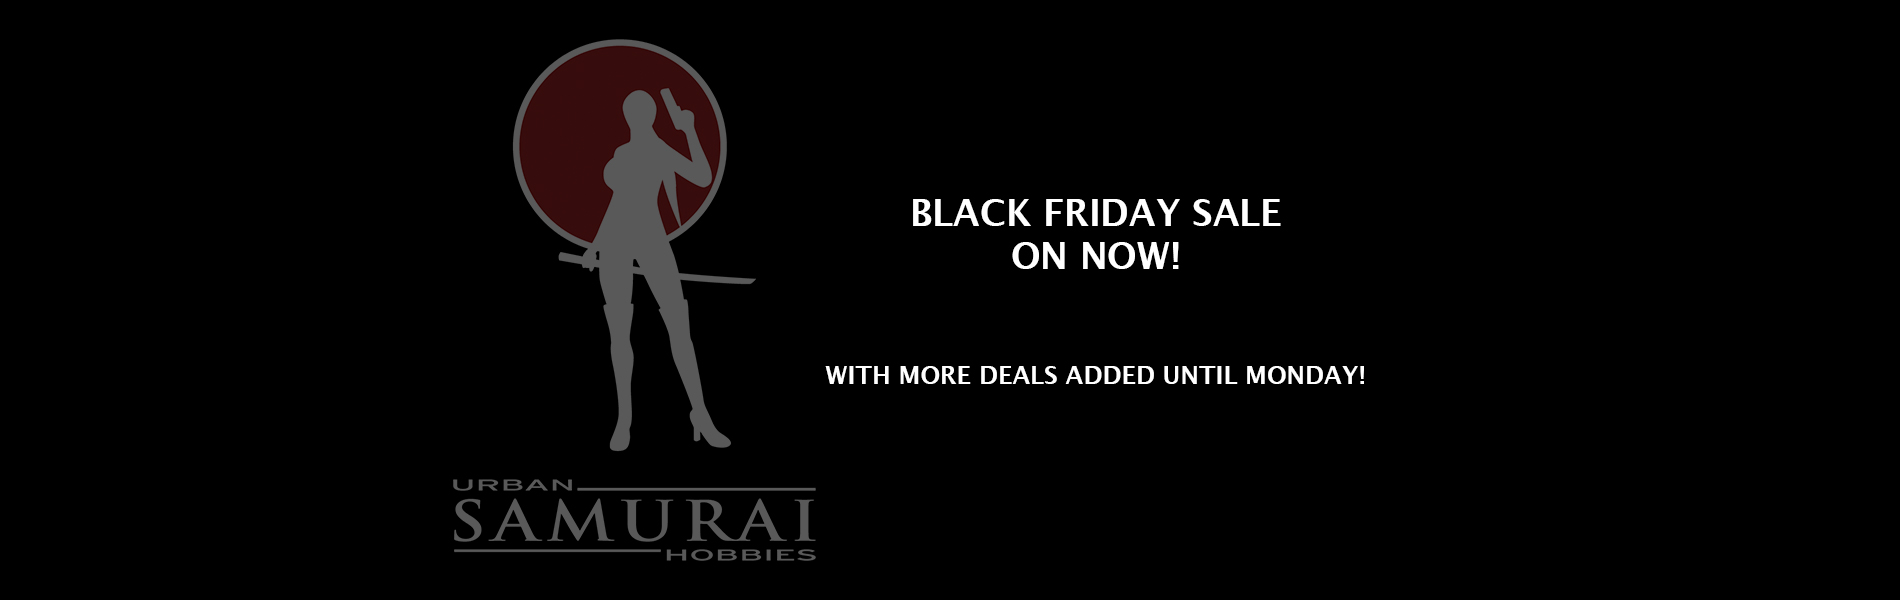 Black Friday Sale on NOW! - Urban Samurai Hobbies